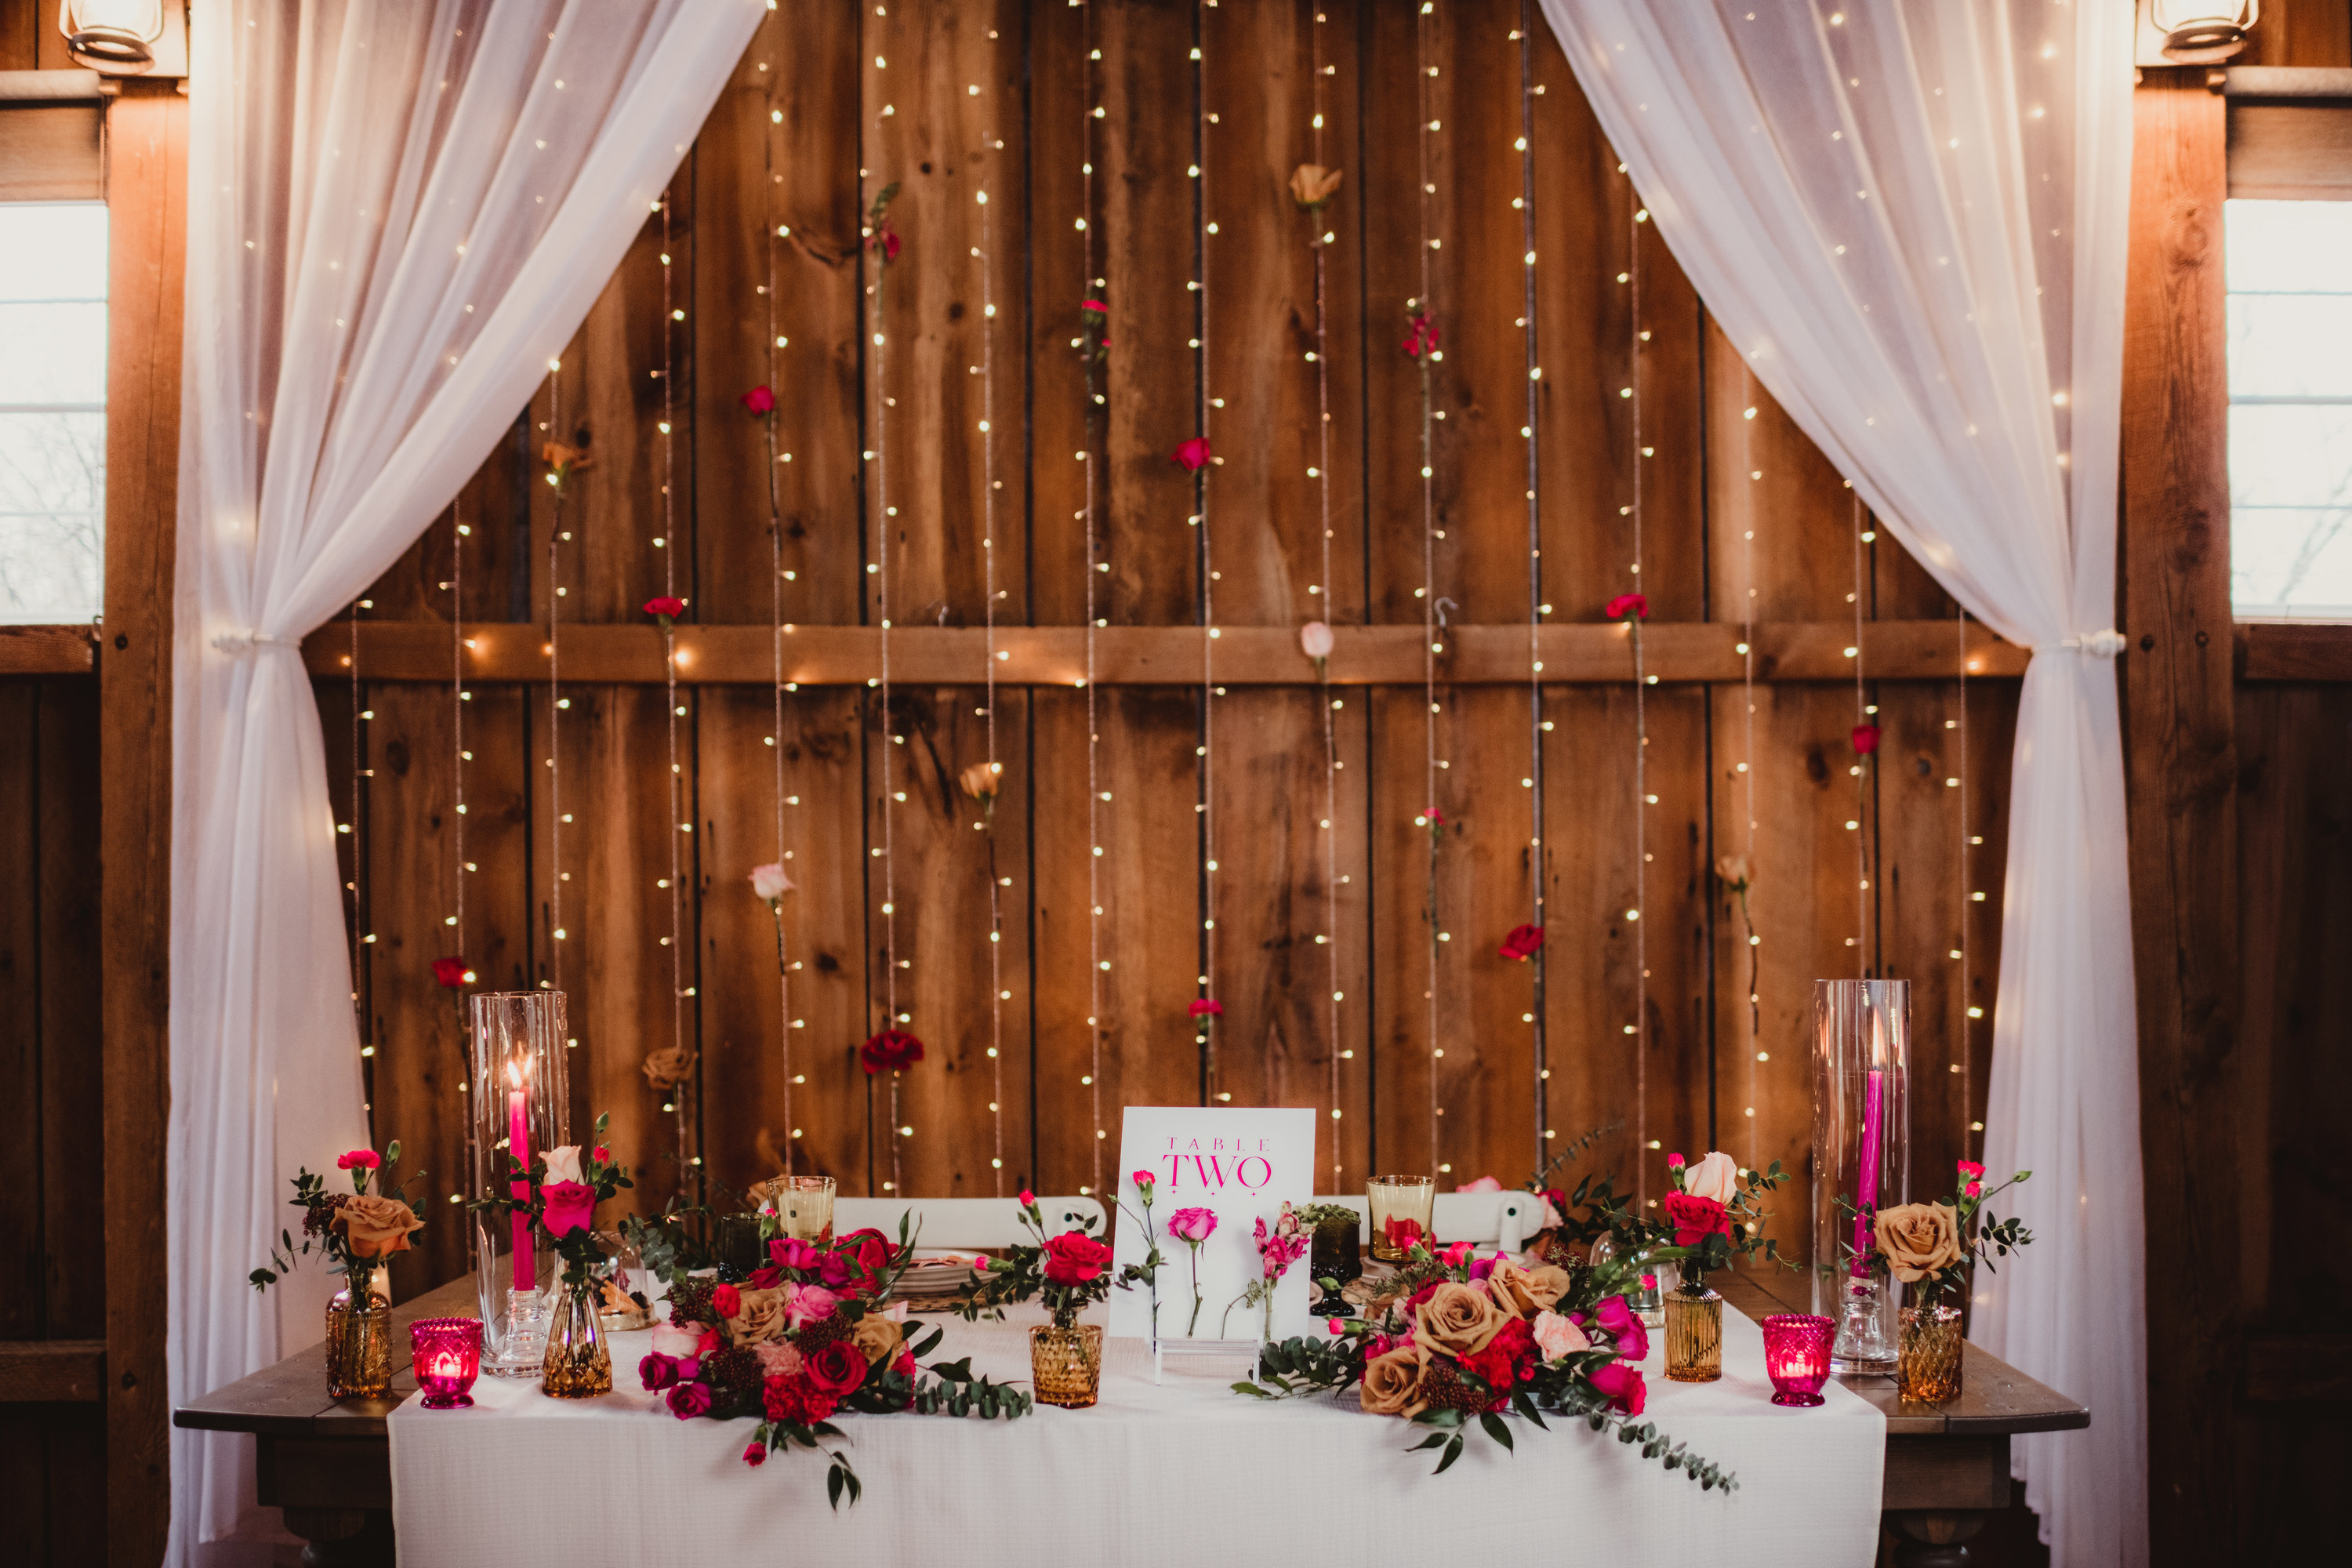 A table at a wedding